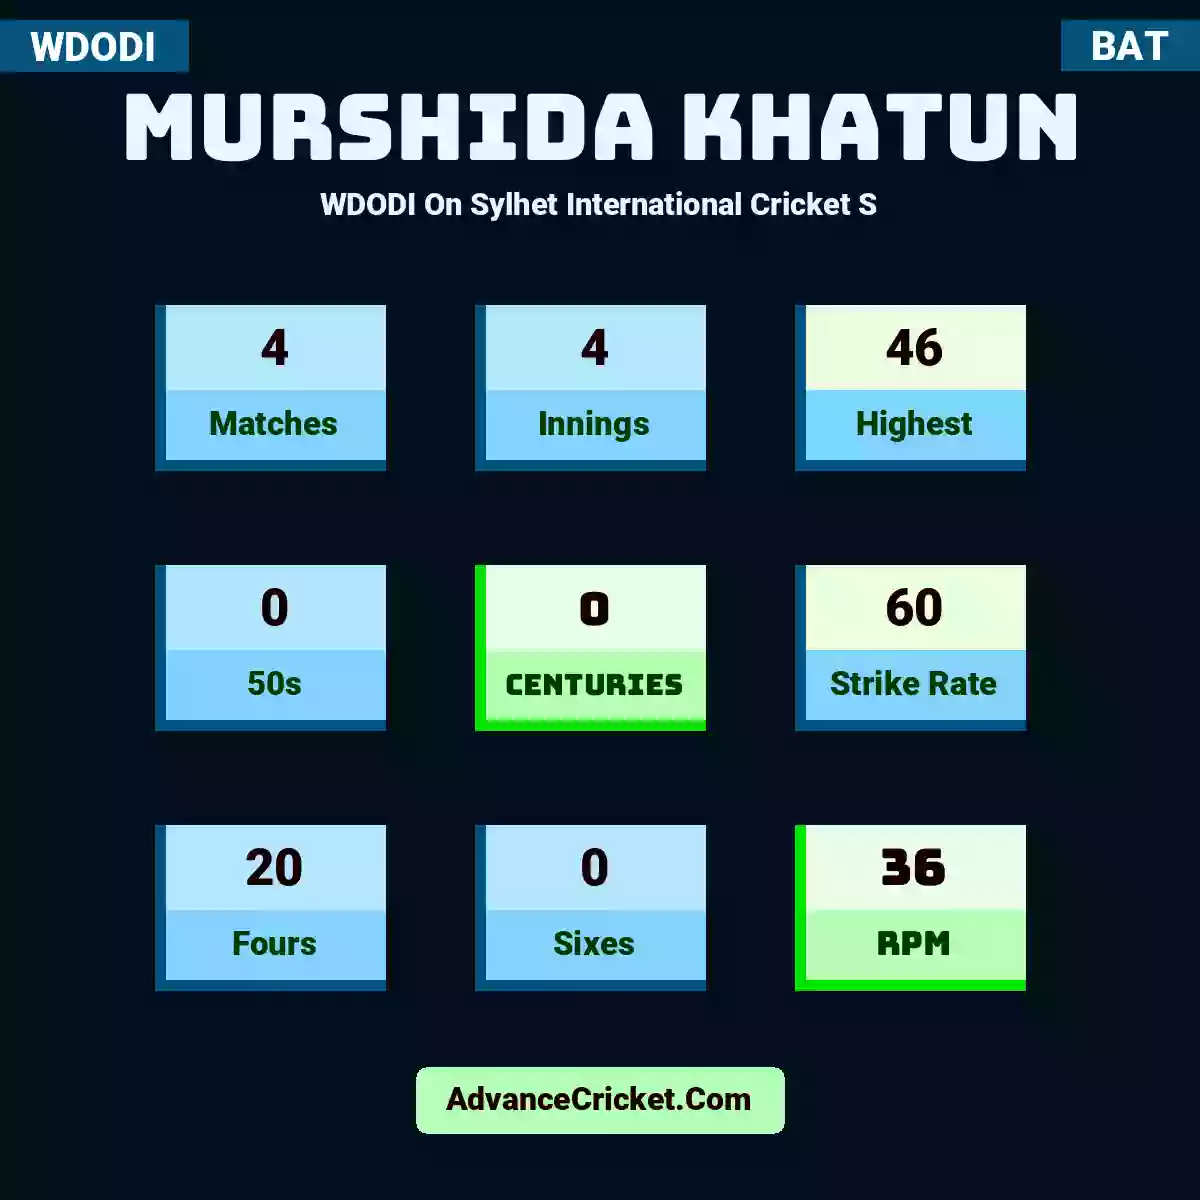 Murshida Khatun WDODI  On Sylhet International Cricket S, Murshida Khatun played 4 matches, scored 46 runs as highest, 0 half-centuries, and 0 centuries, with a strike rate of 60. M.Khatun hit 20 fours and 0 sixes, with an RPM of 36.